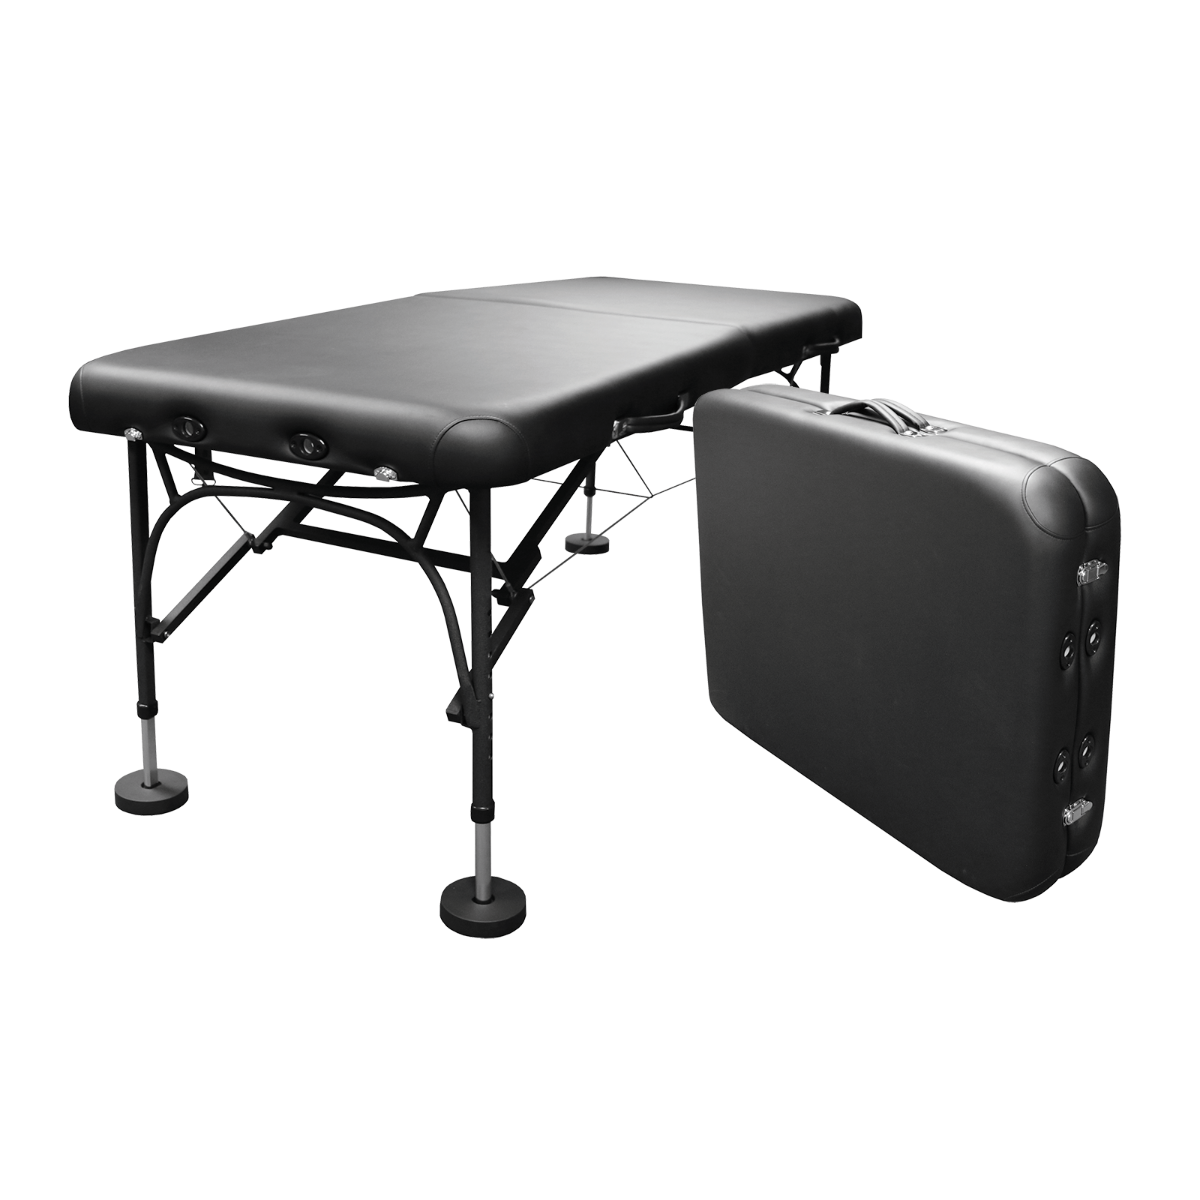 Portable Aluminum Treatment Table - Black